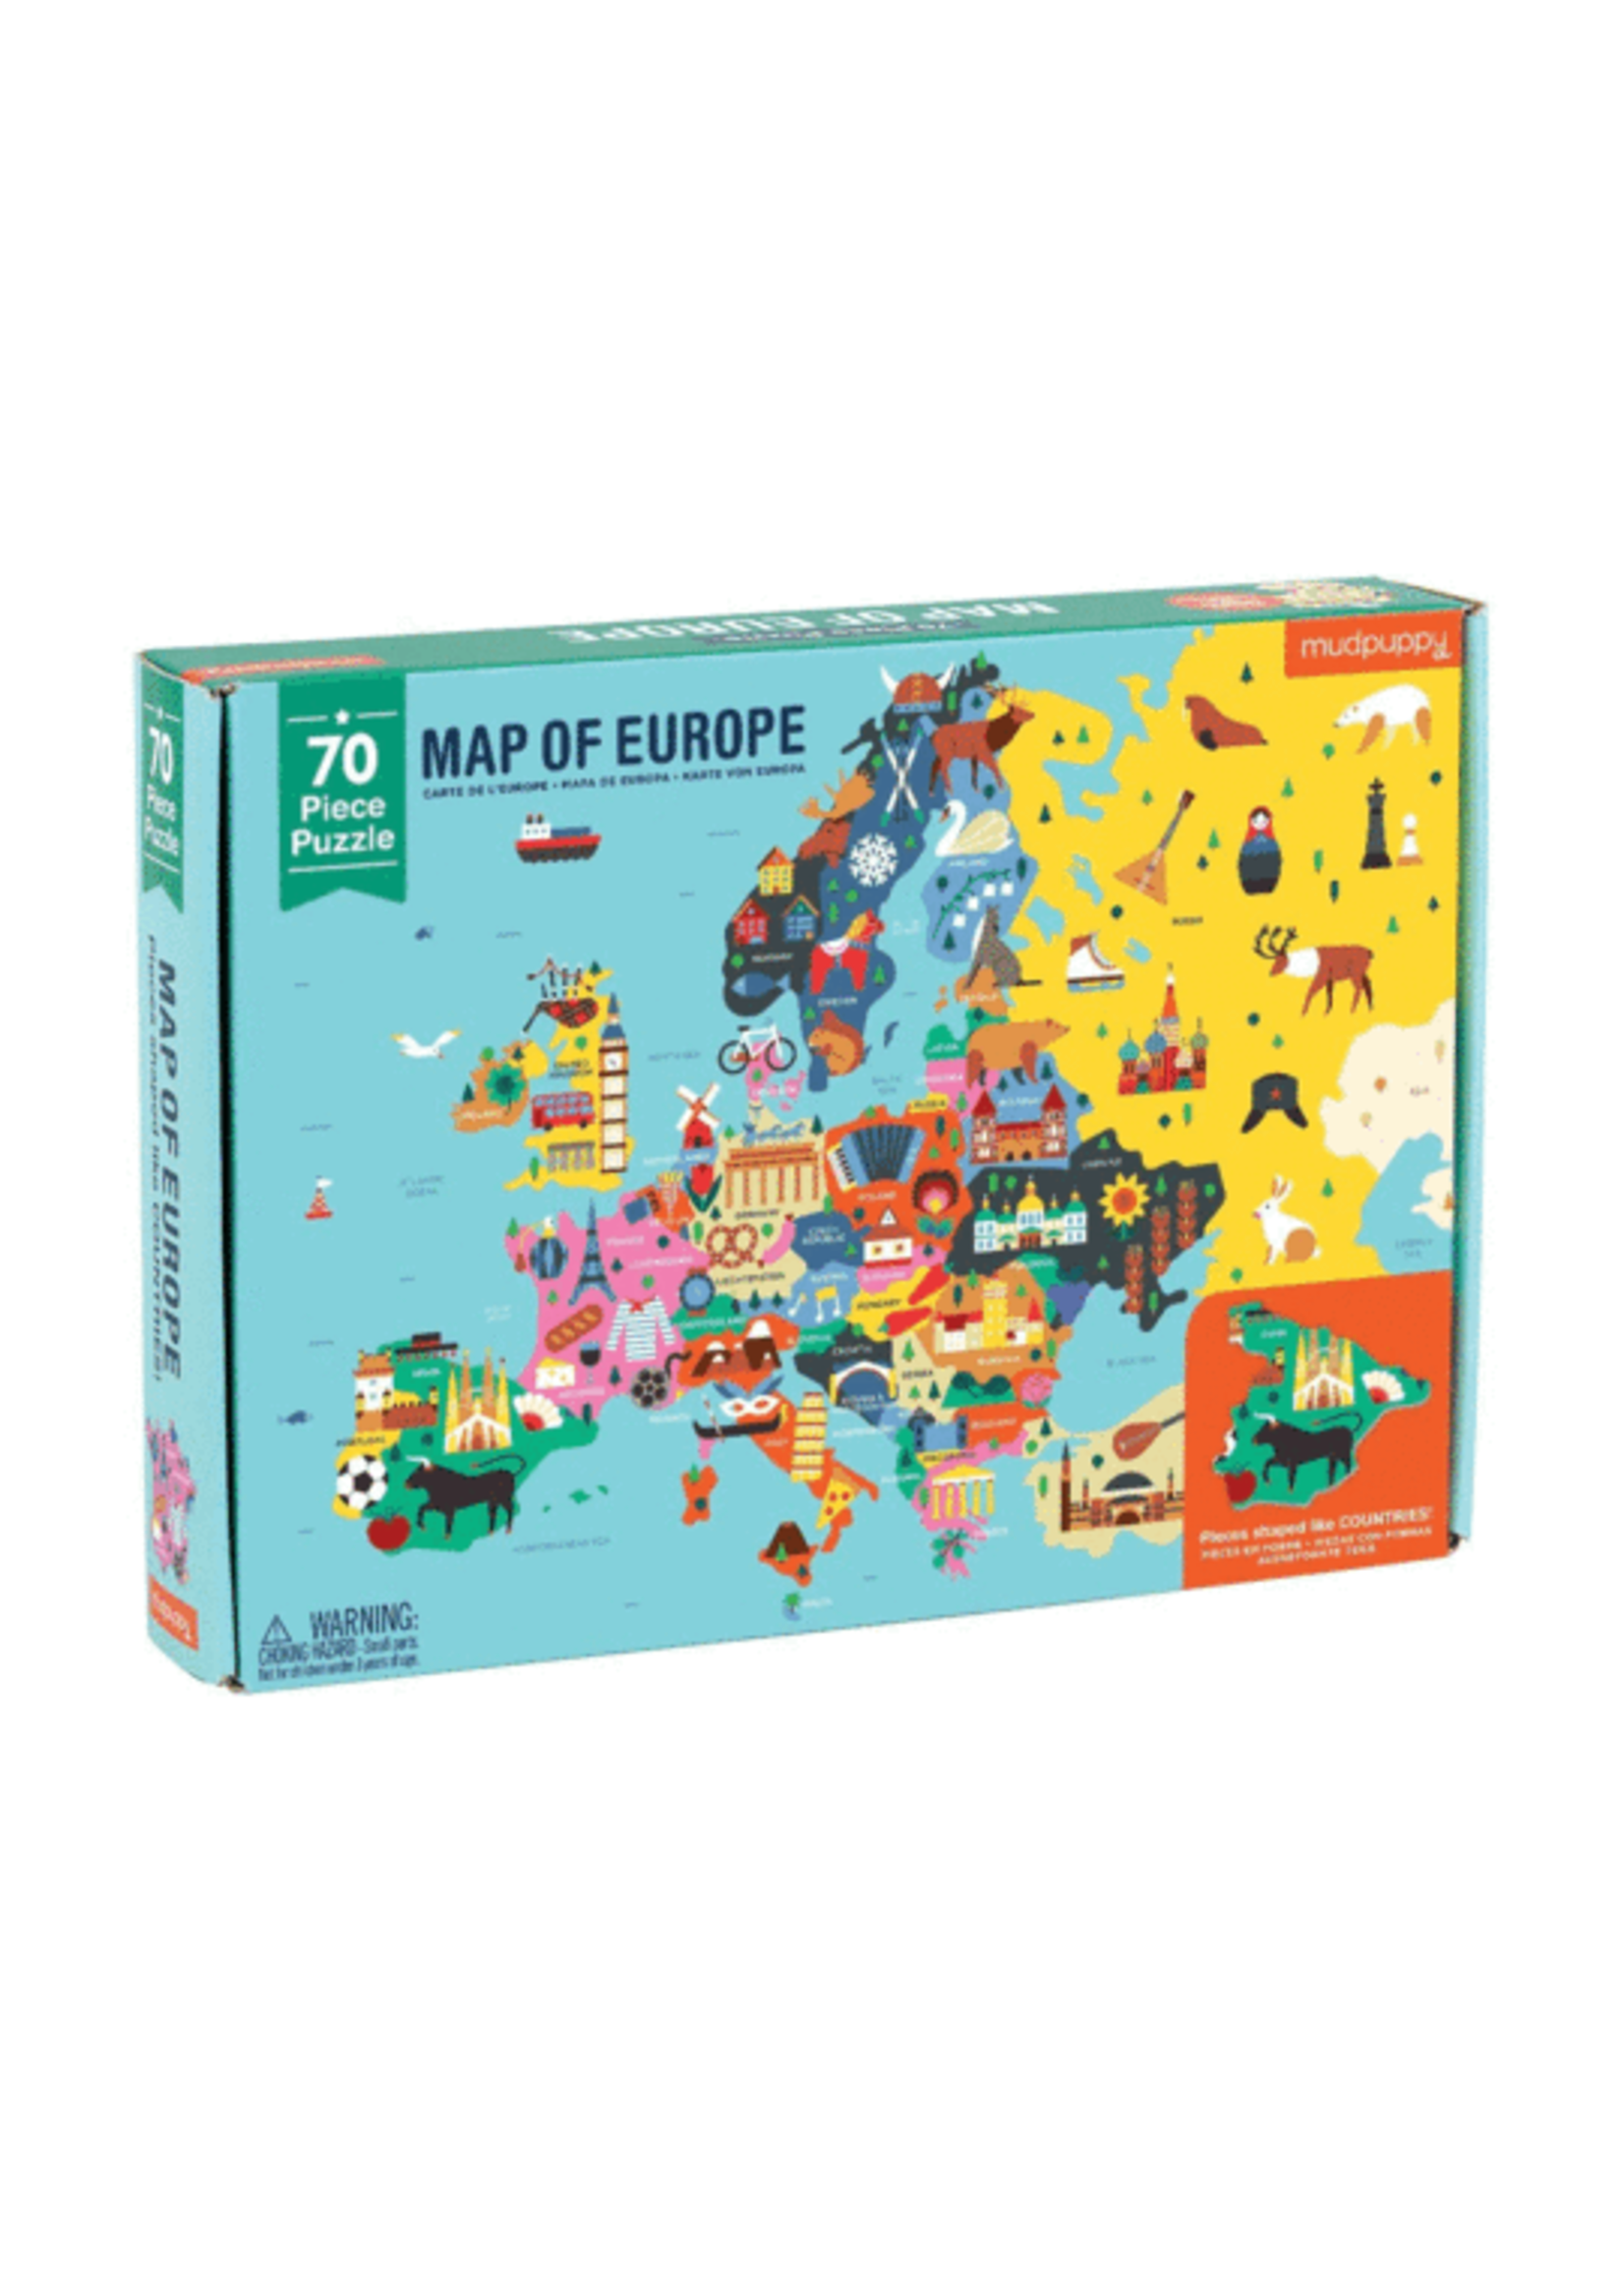 Mudpuppy "Map of Europe" 70 Piece Puzzle